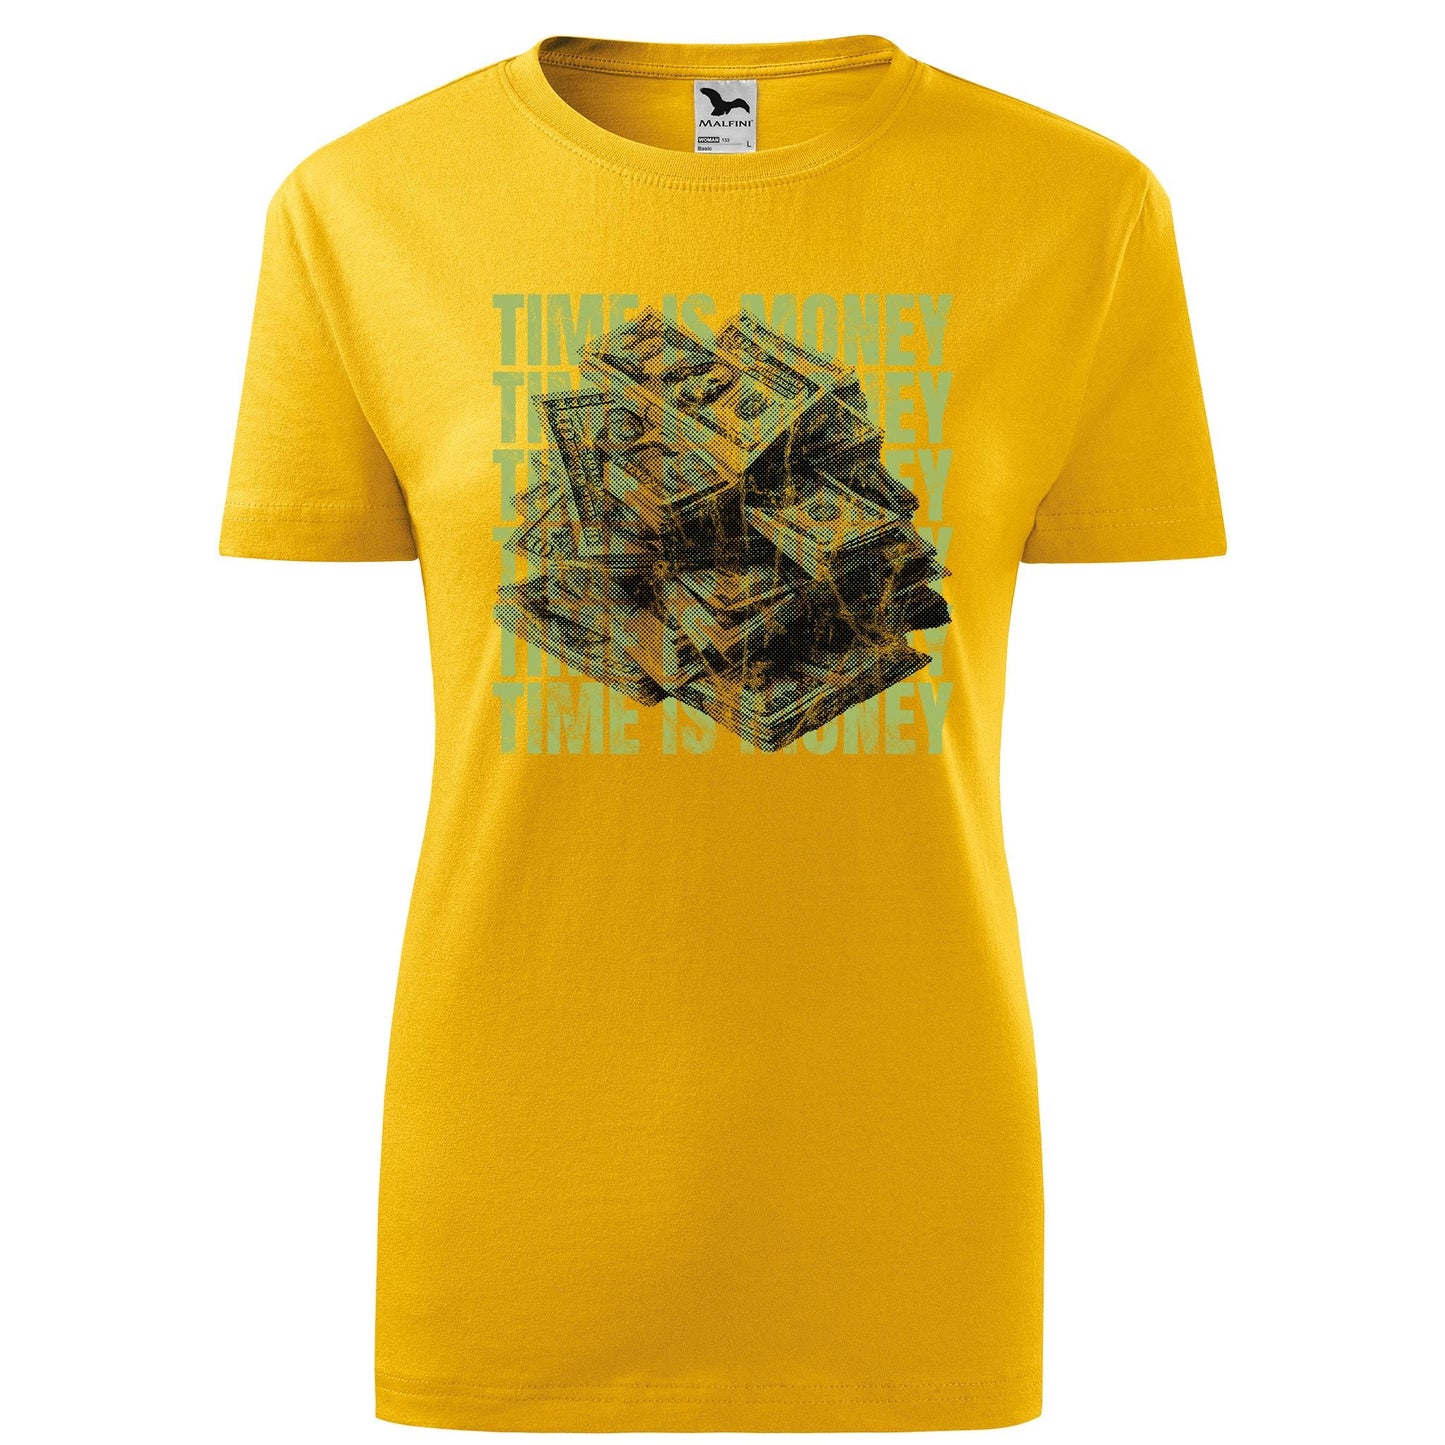 Time is money t-shirt - rvdesignprint